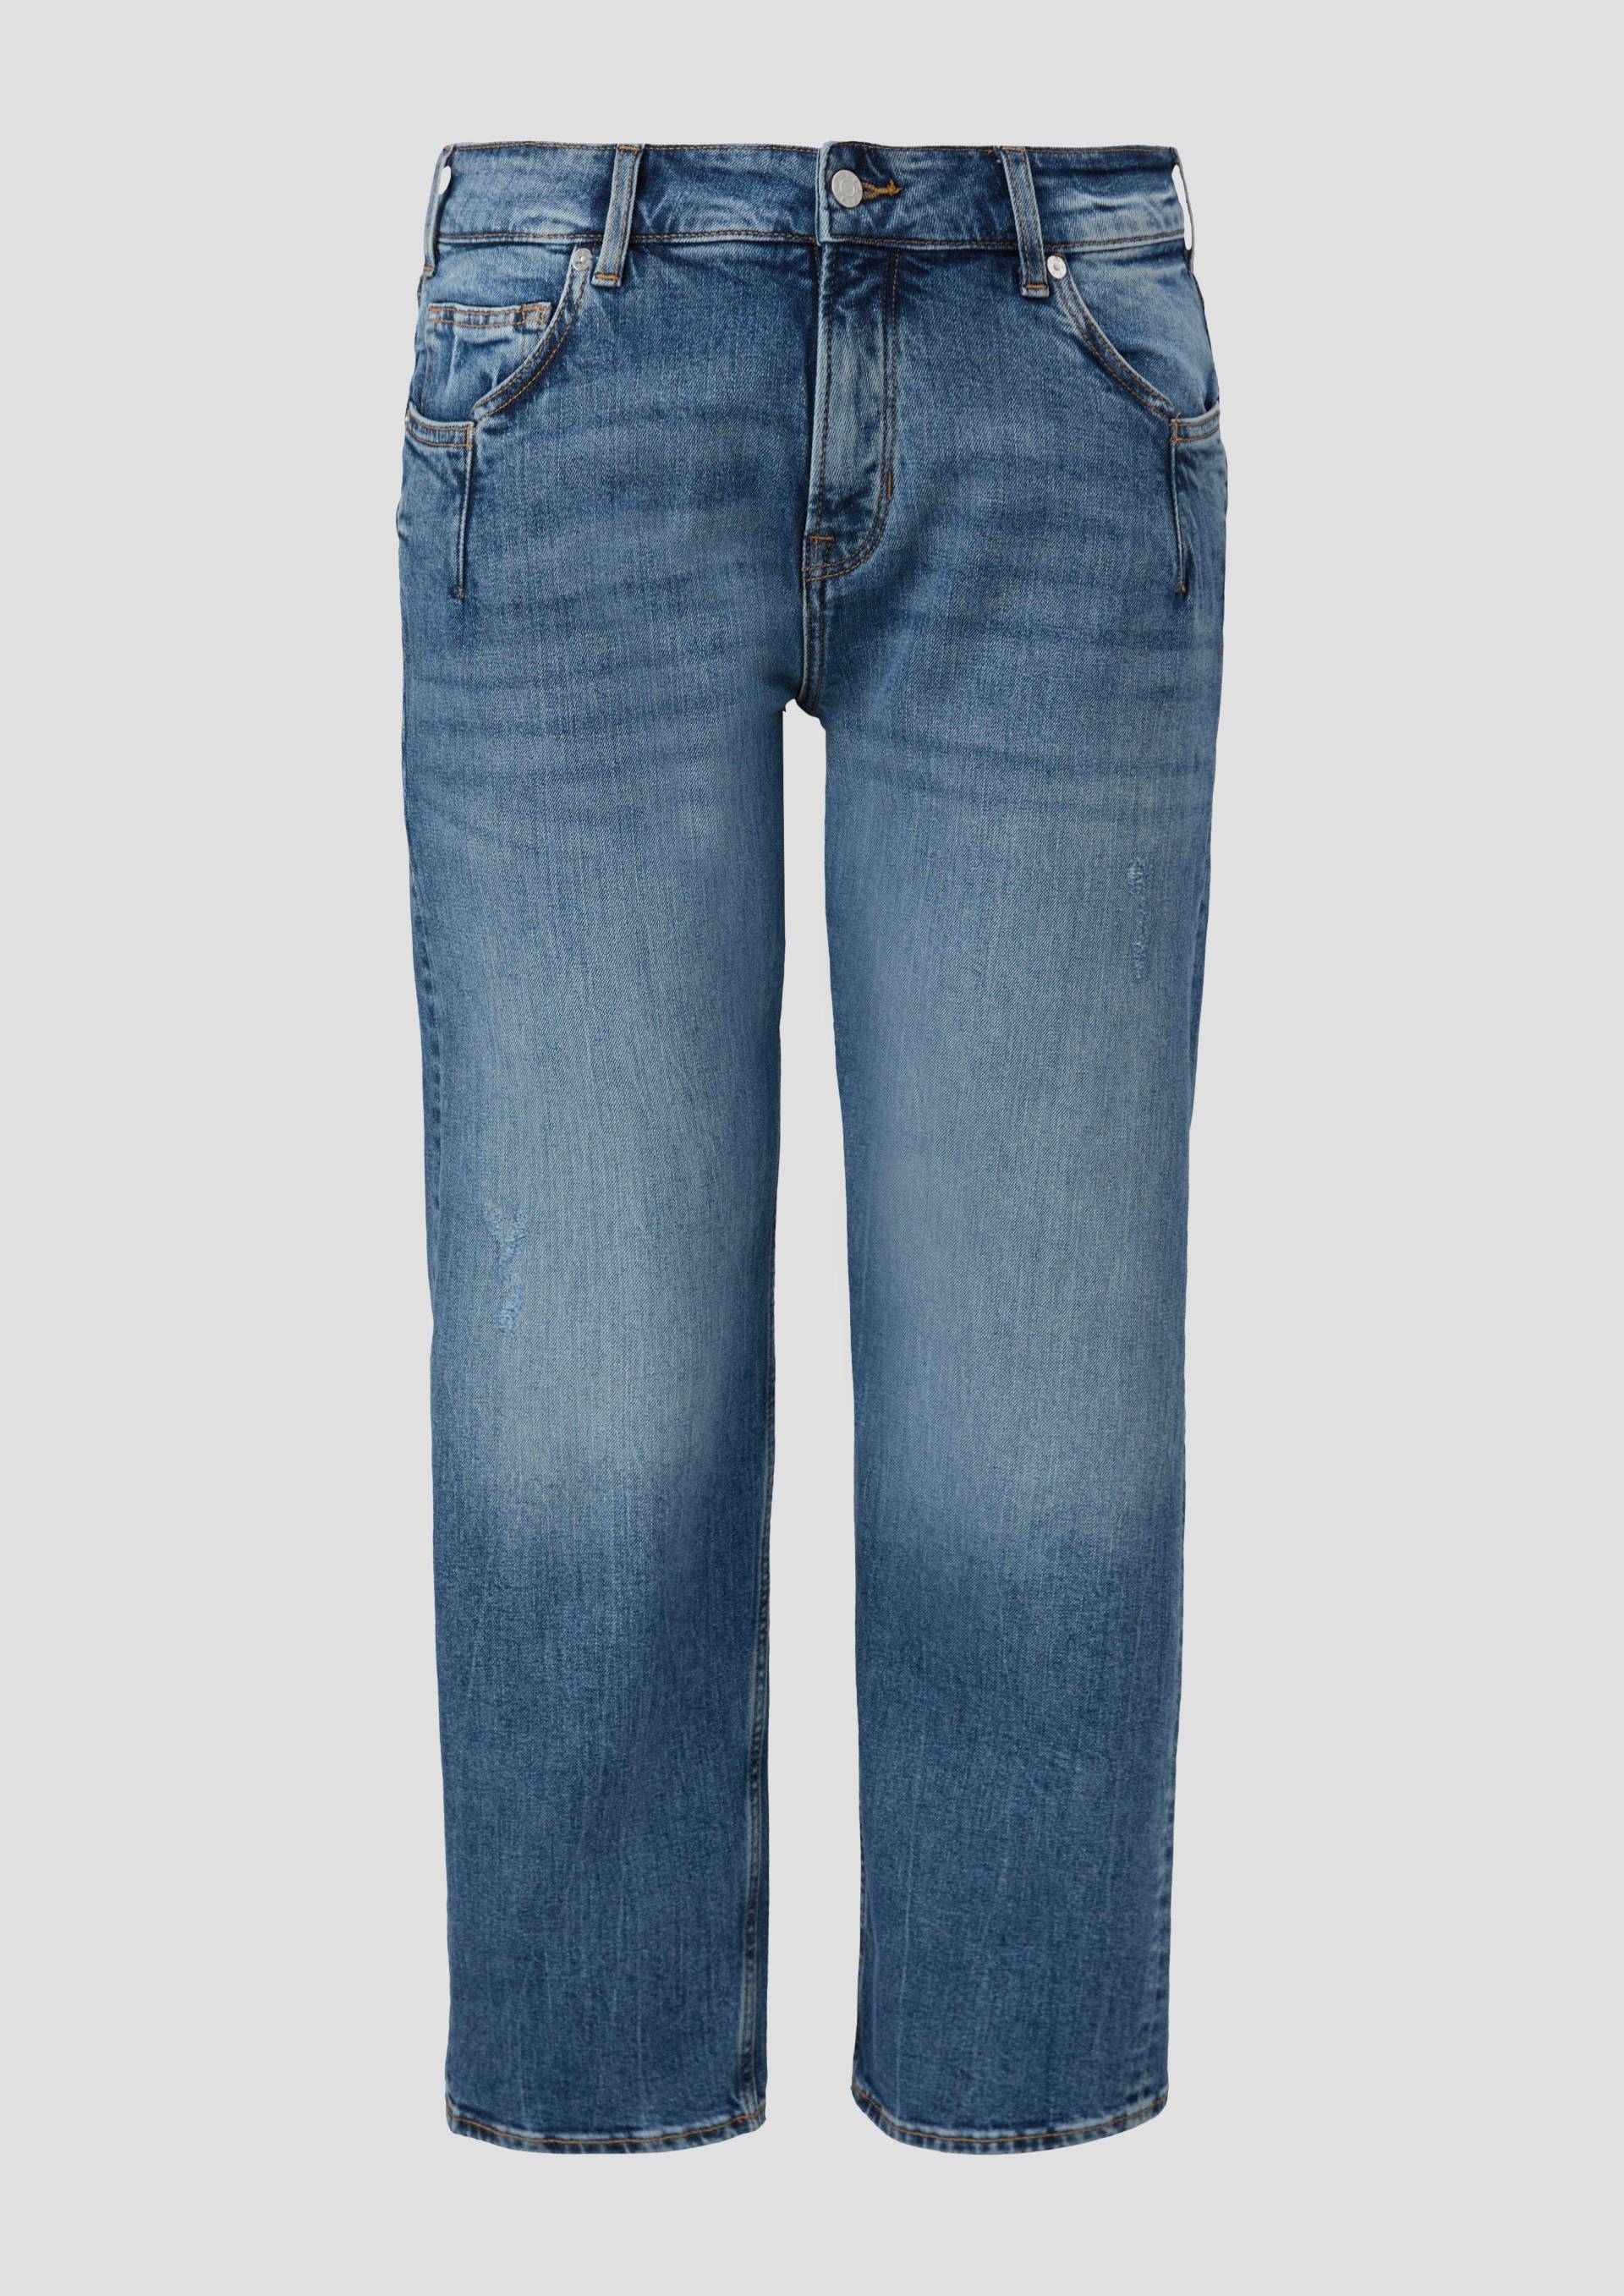 s.Oliver - Curvy Jeans / Regular Fit / Mid Rise / Semi-Wide Leg, Damen, blau von s.Oliver